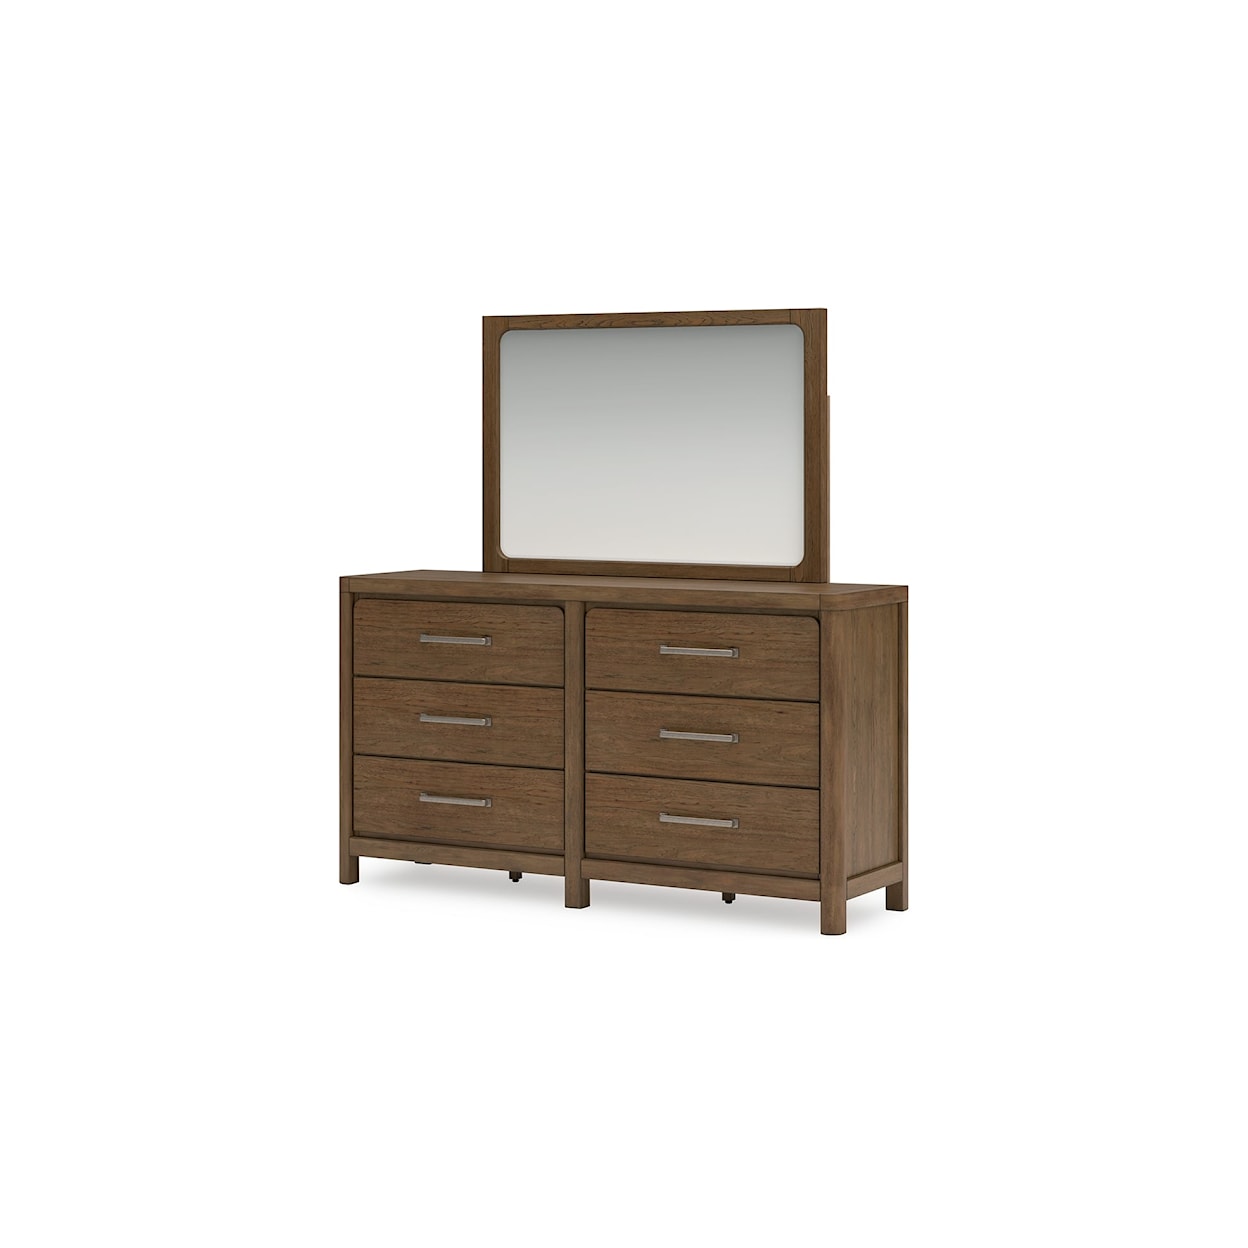 StyleLine Cabalynn Dresser and Mirror Set